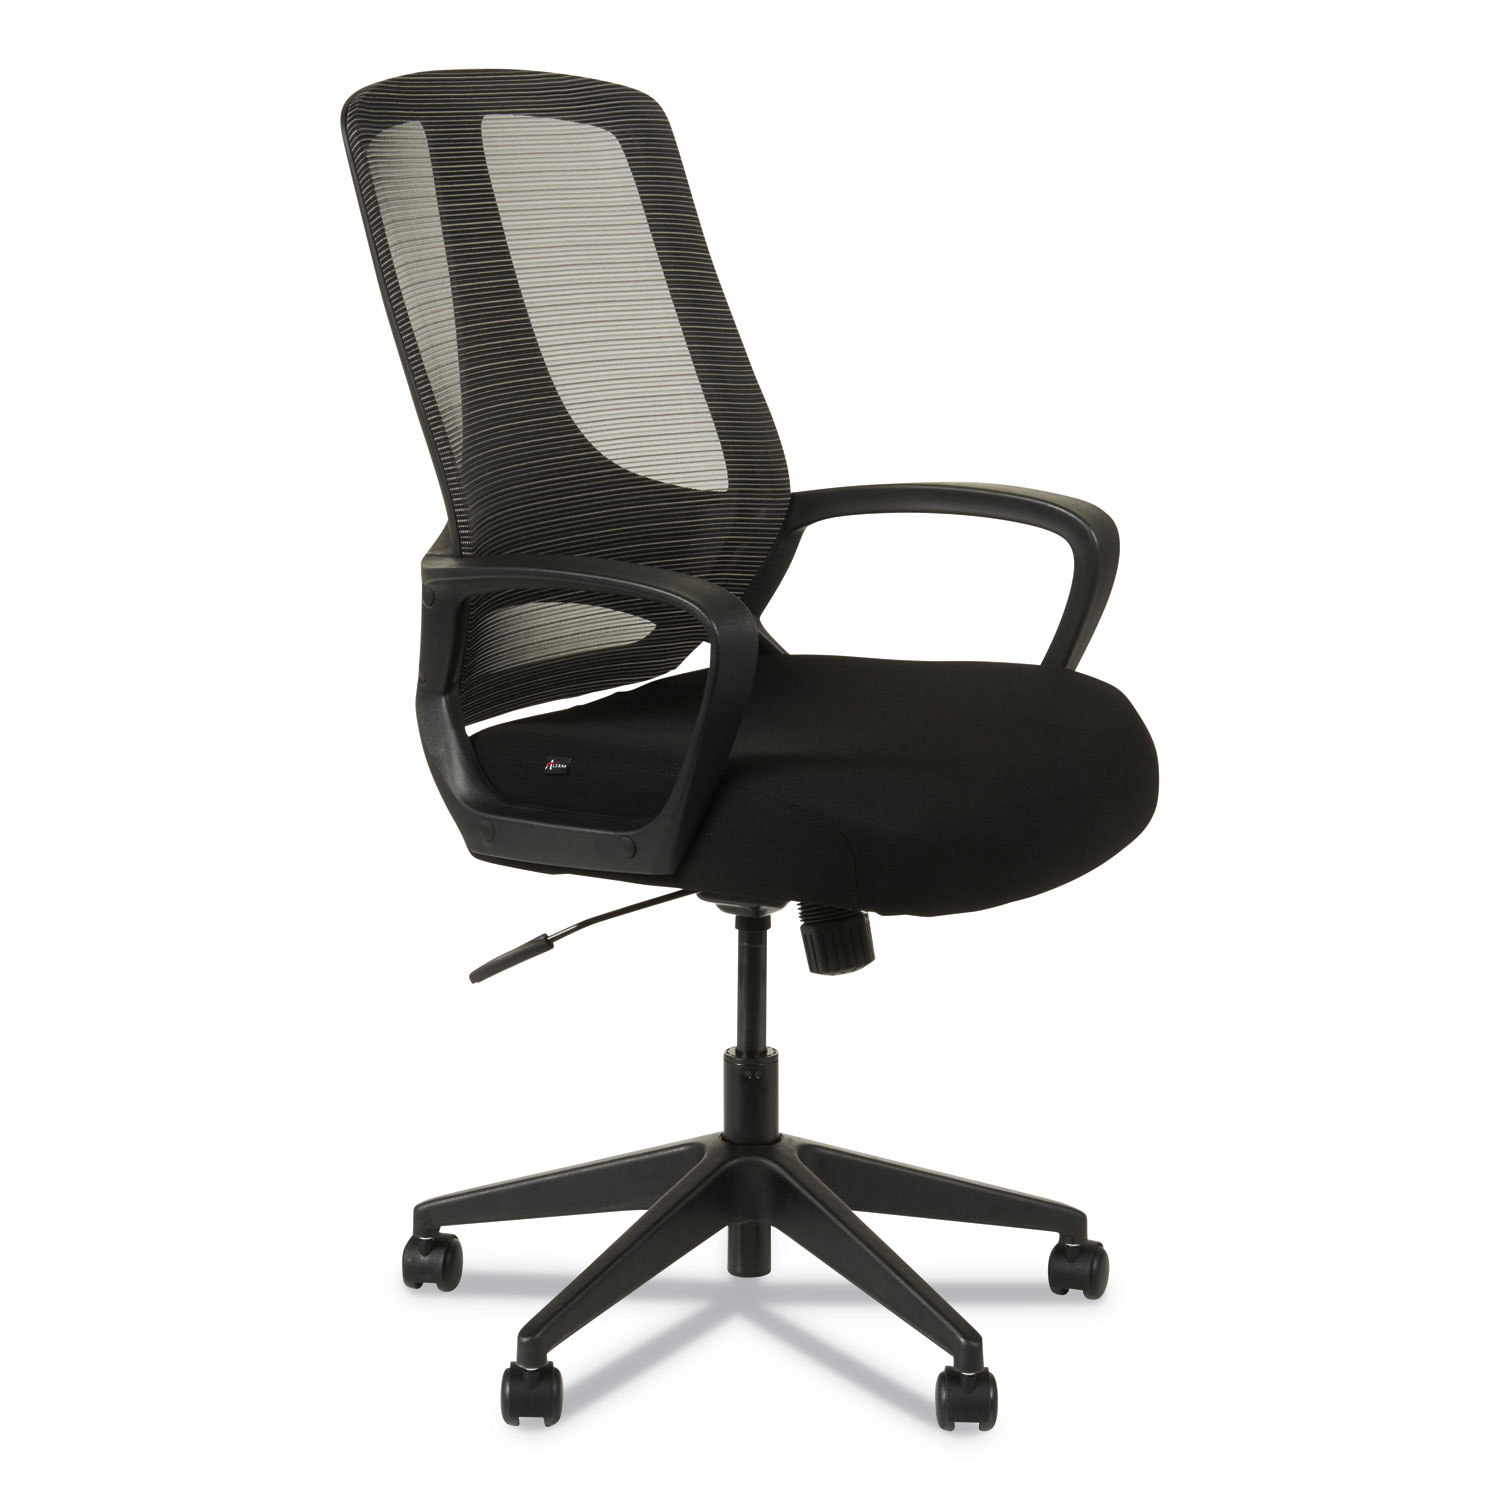  Alera ALEMB4718 Alera MB Series Mesh Mid-Back Office Chair, Supports up to 275 lbs., Black Seat/Black Back, Black Base (ALEMB4718) 